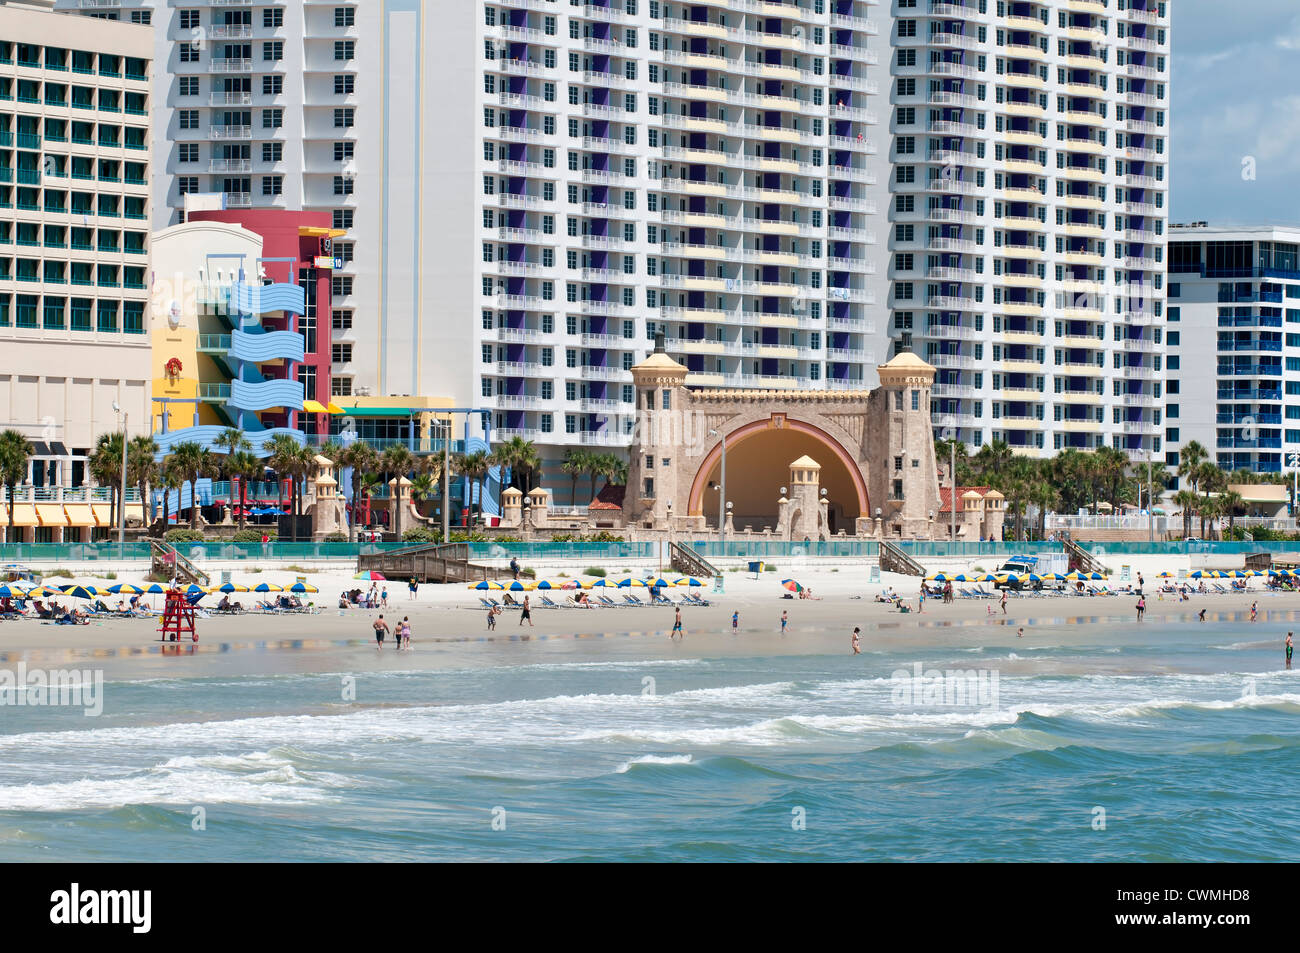 Daytona Beach, Florida, U.S.A. - June 18, 2012: View of hotels and condominiums with beach activity on Daytona Beach, Florida, J Stock Photo